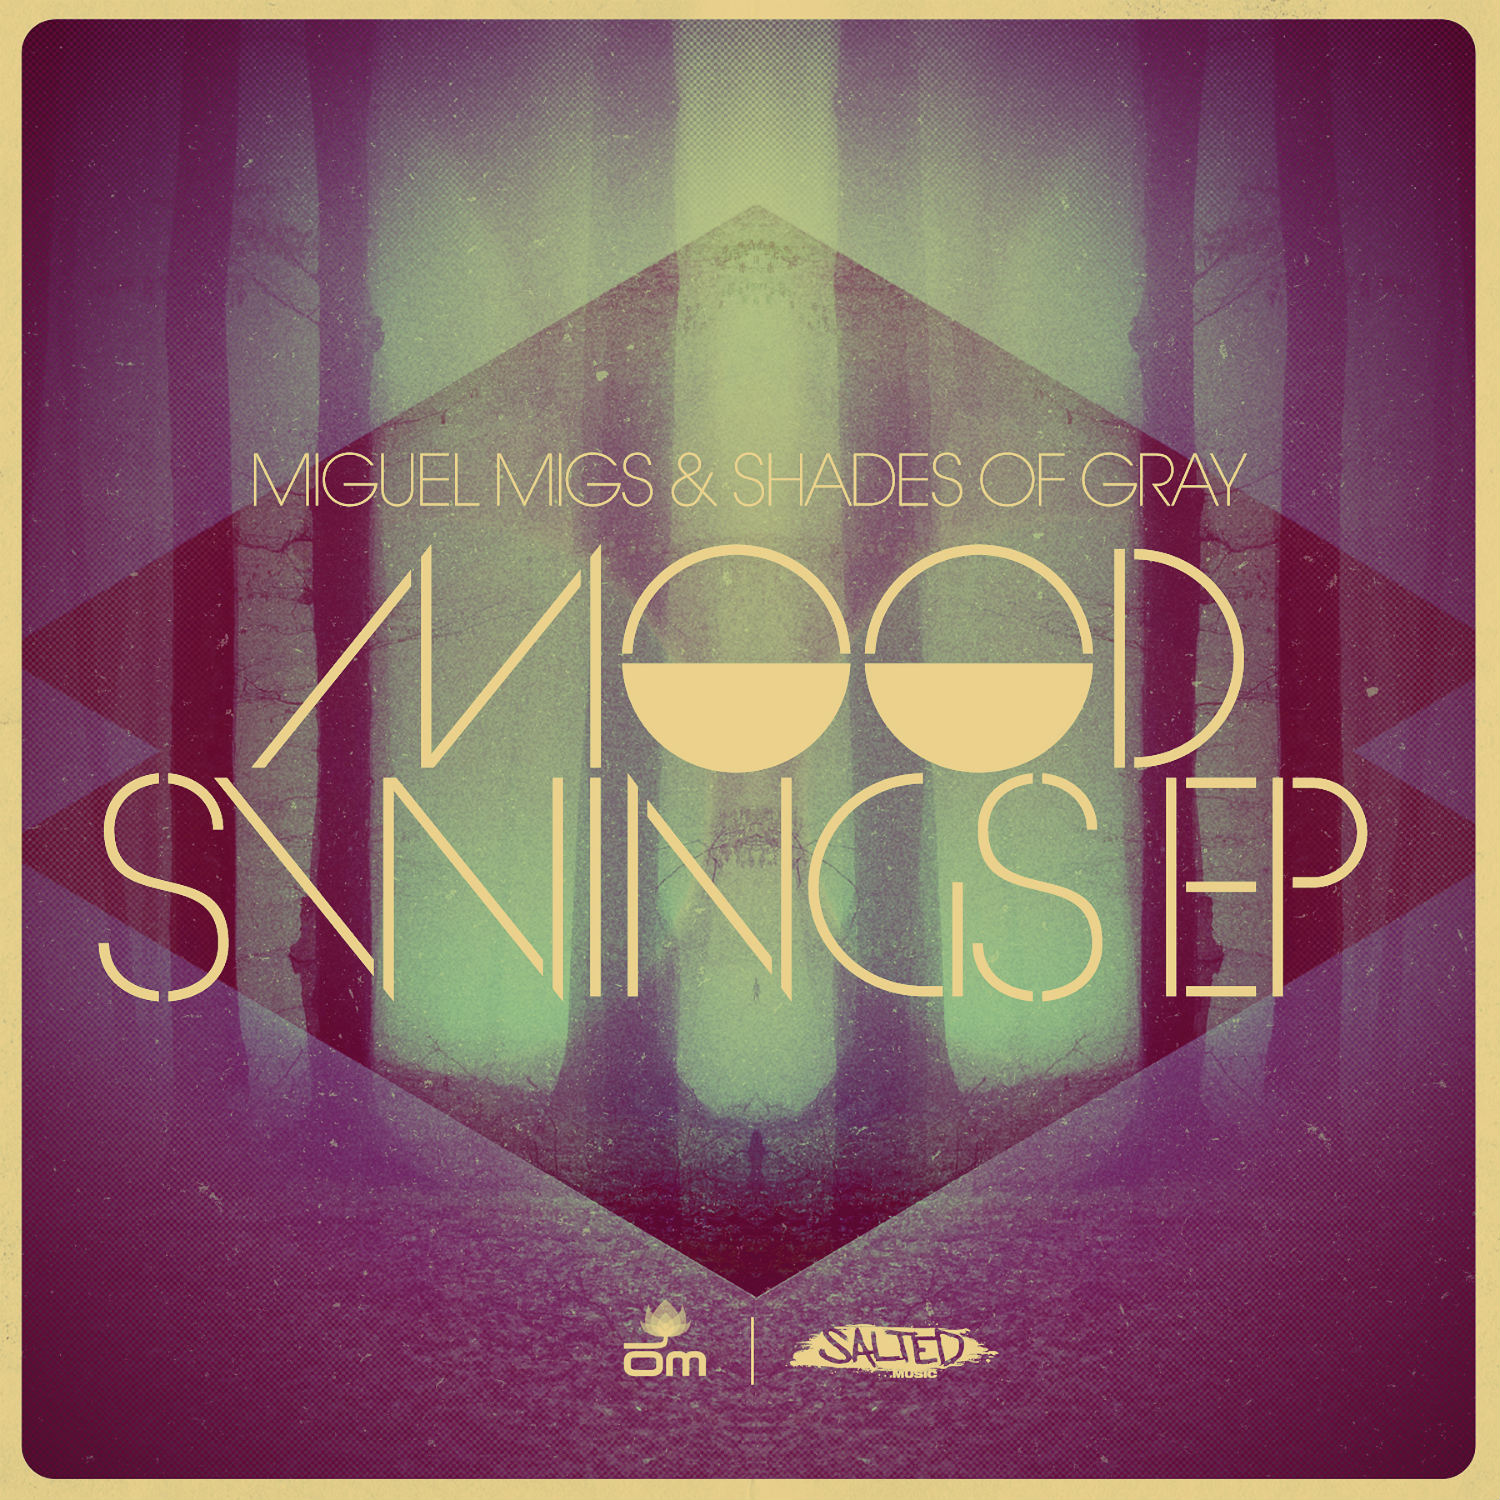 Miguel Migs & Shades - Mood Swings EP